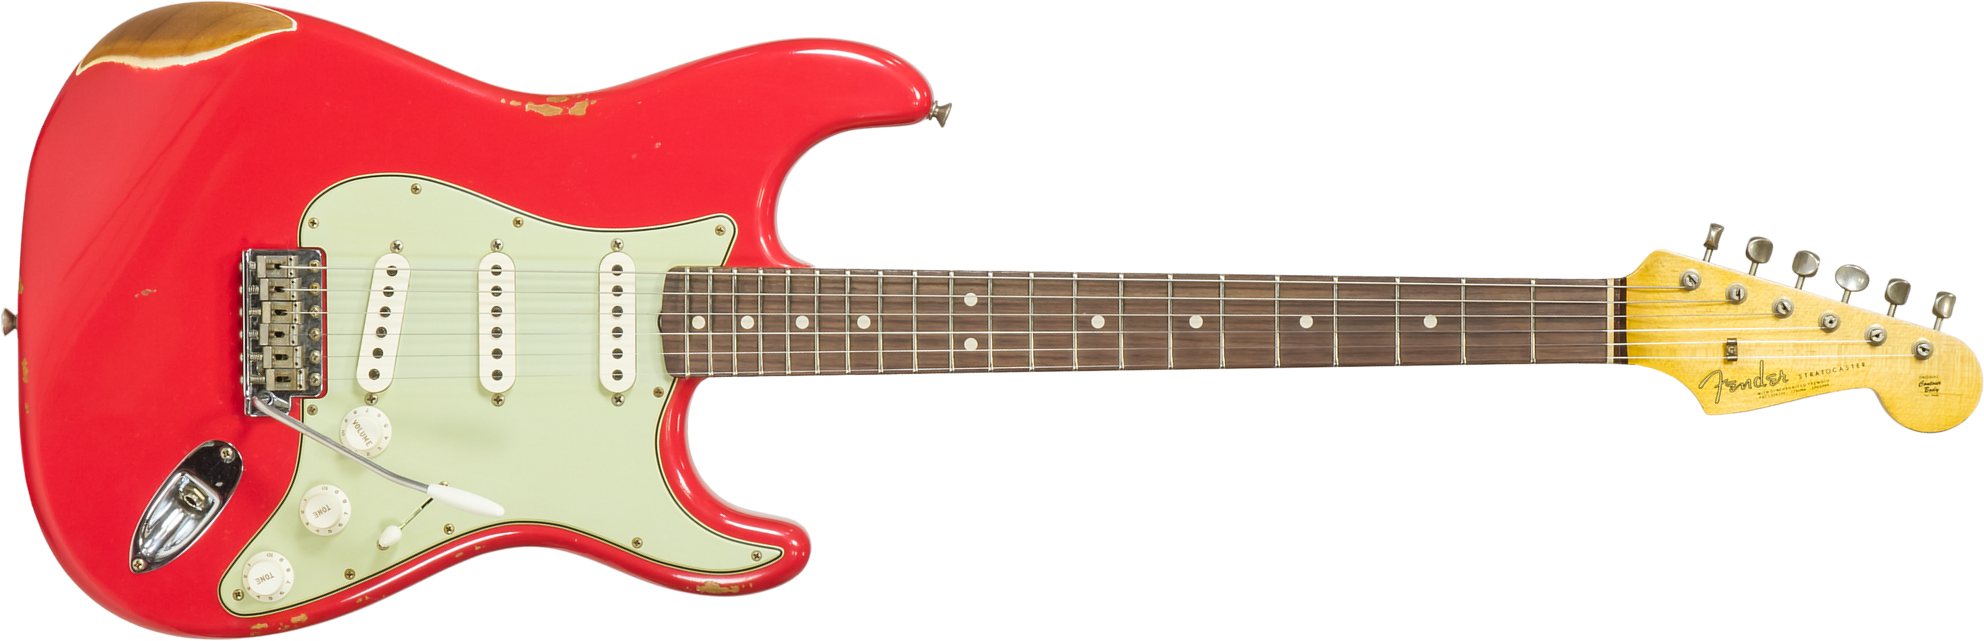 Fender Custom Shop Strat 1963 3s Trem Rw #r117571 - Relic Fiesta Red - Guitarra eléctrica con forma de str. - Main picture